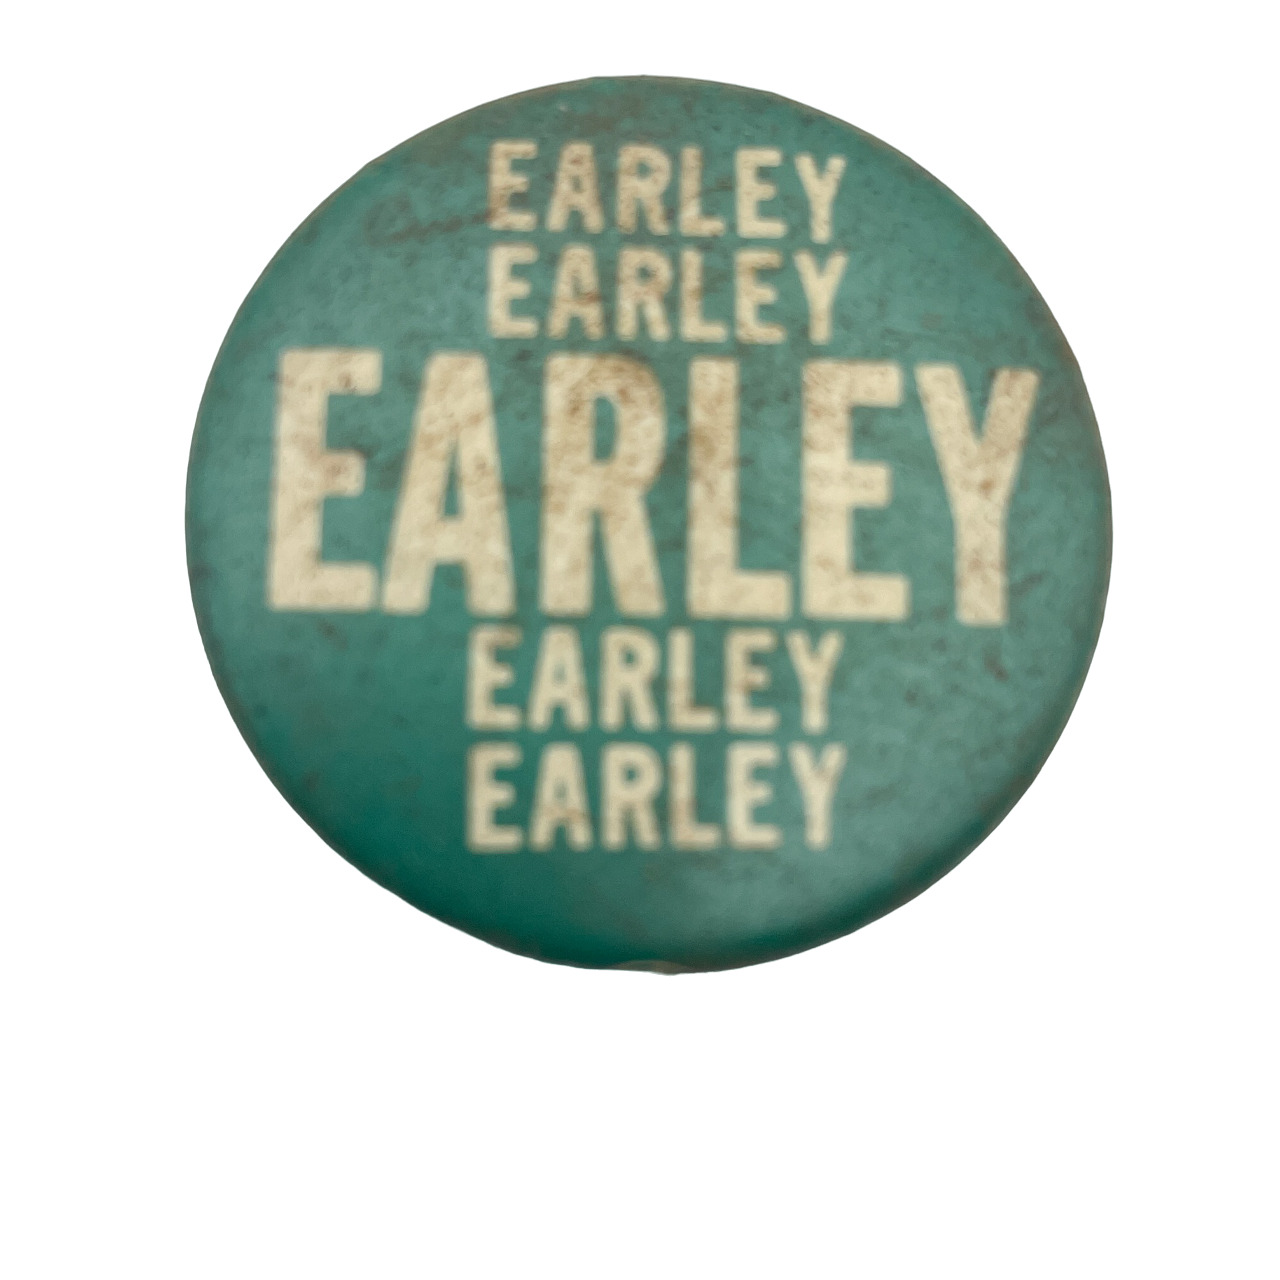 Vintage 60s-70s Earley Earley Earley Pinback Pin Button